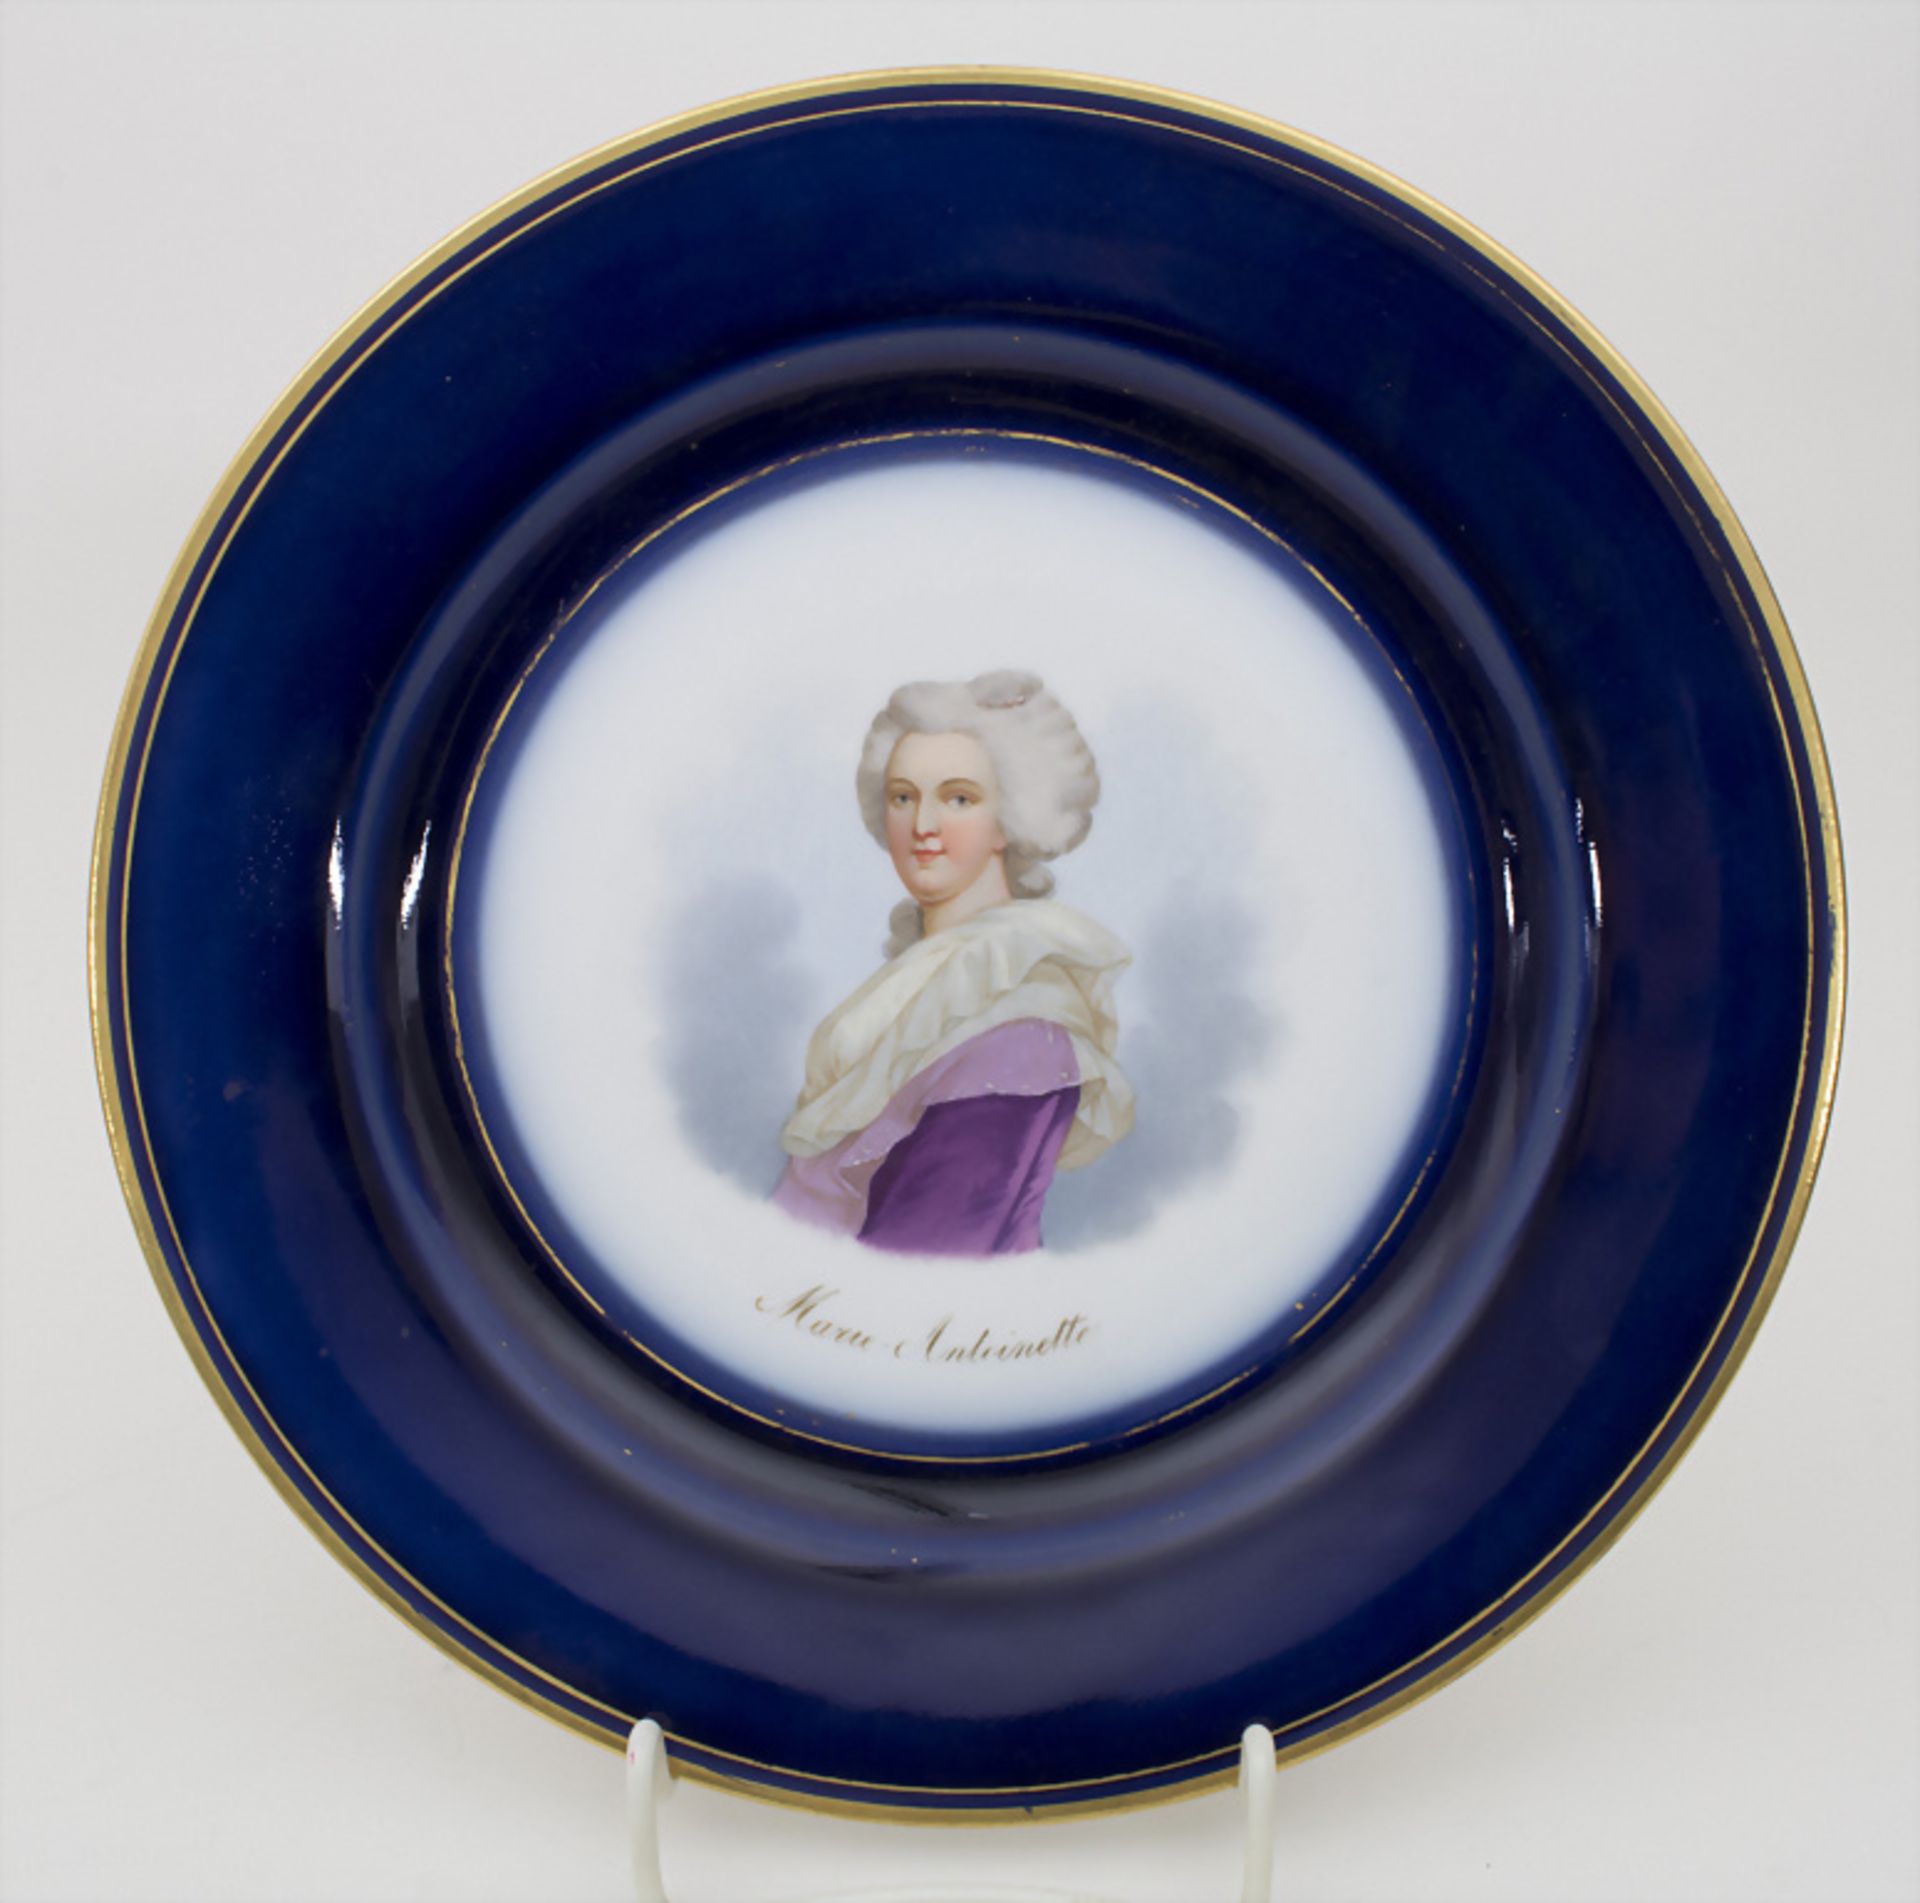 5 Teller mit Damenportraits / A set of 5 plates with ladies portaits, Sèvres, 1860-1861 - Image 11 of 17